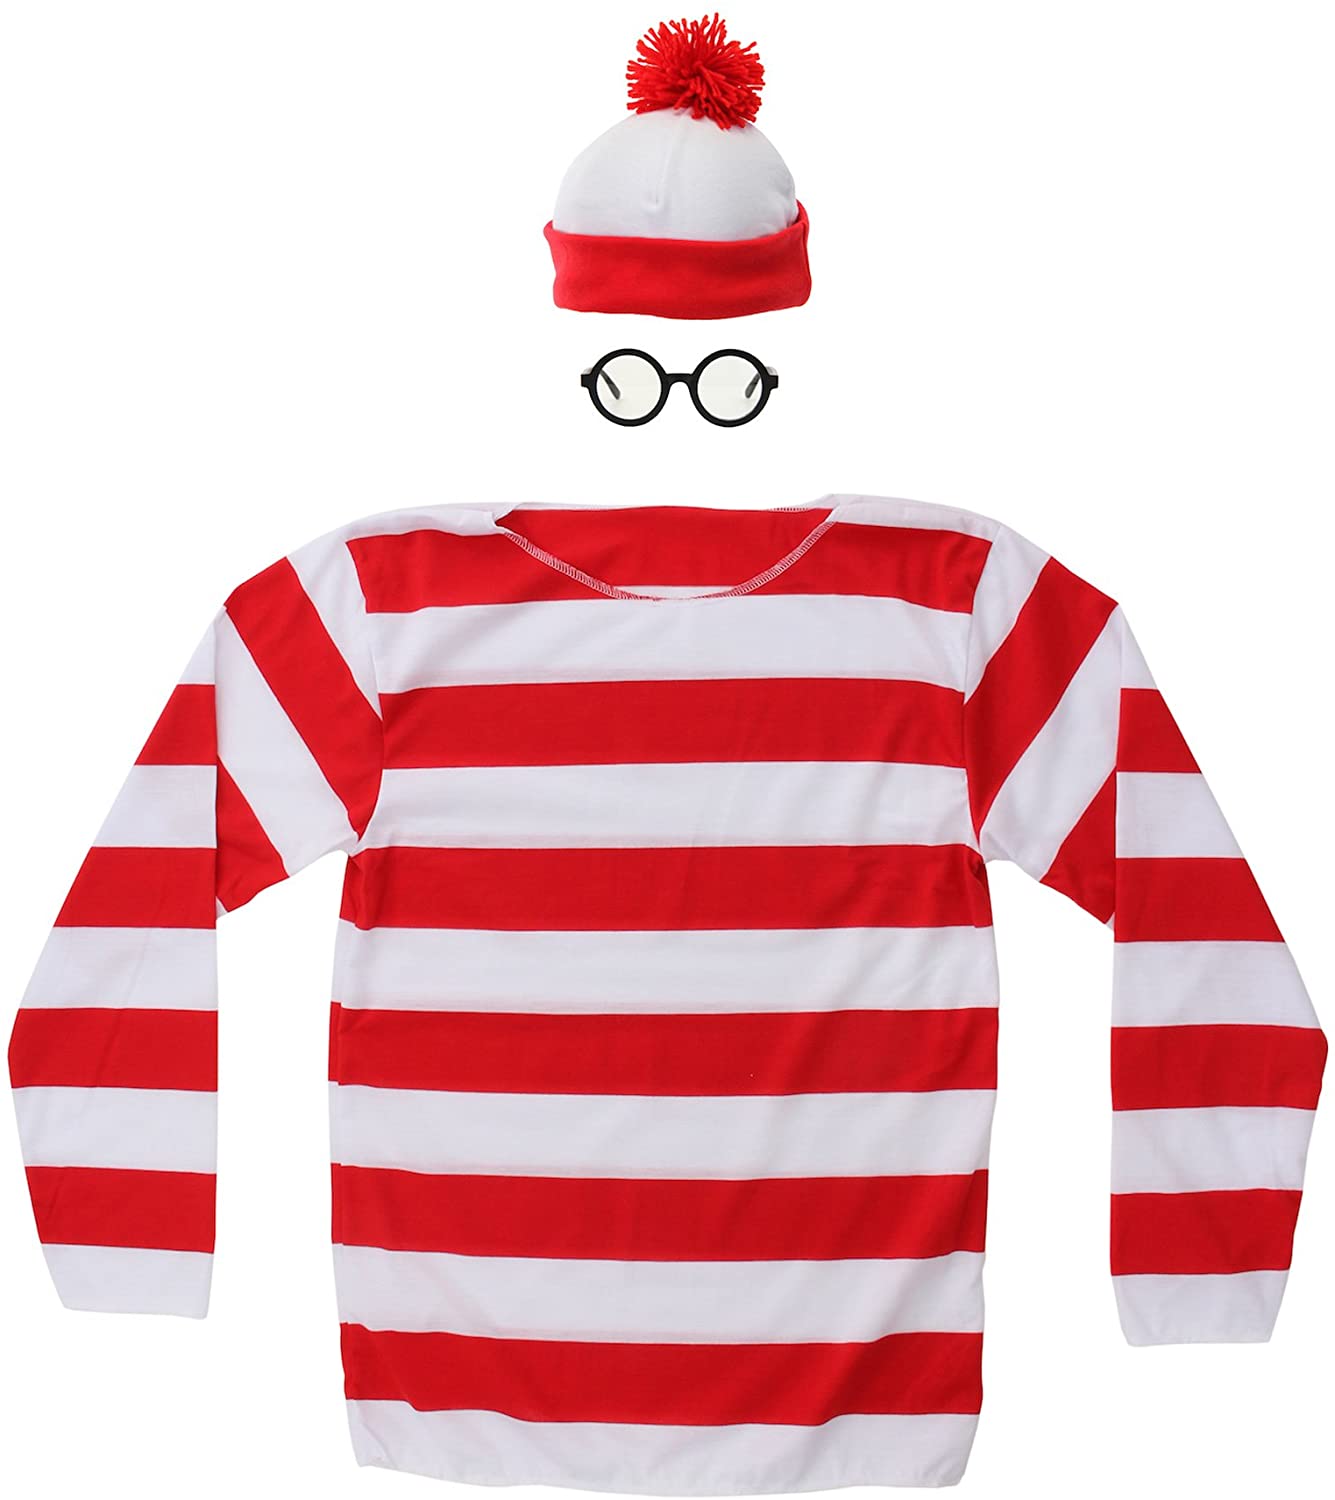 Where's Waldo Shirt For Kids